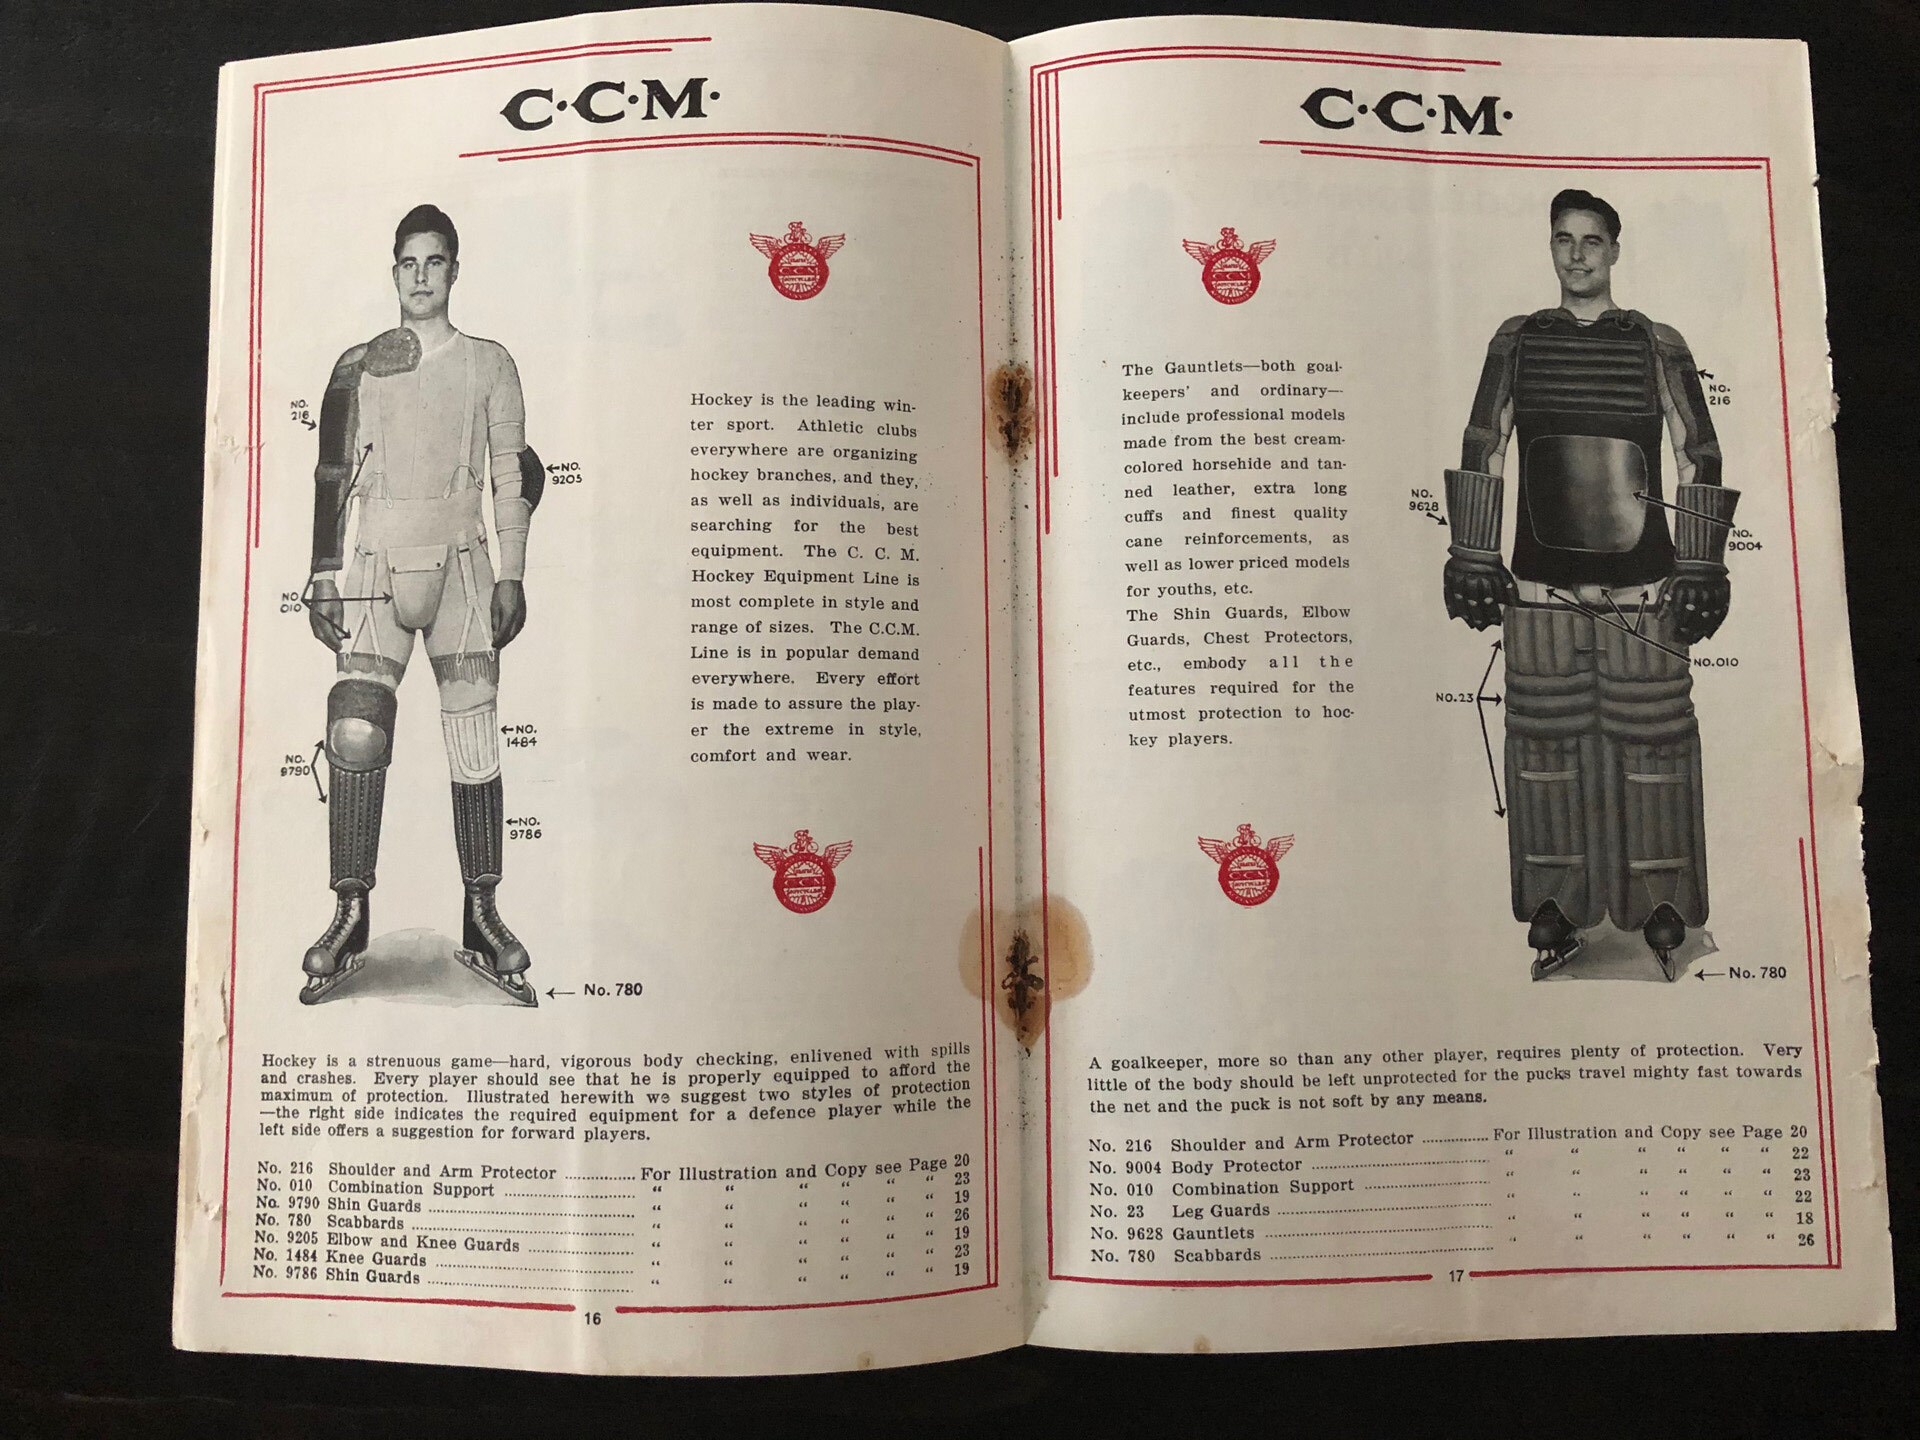 Ice Hockey Goalie Equipment - CCM Hockey